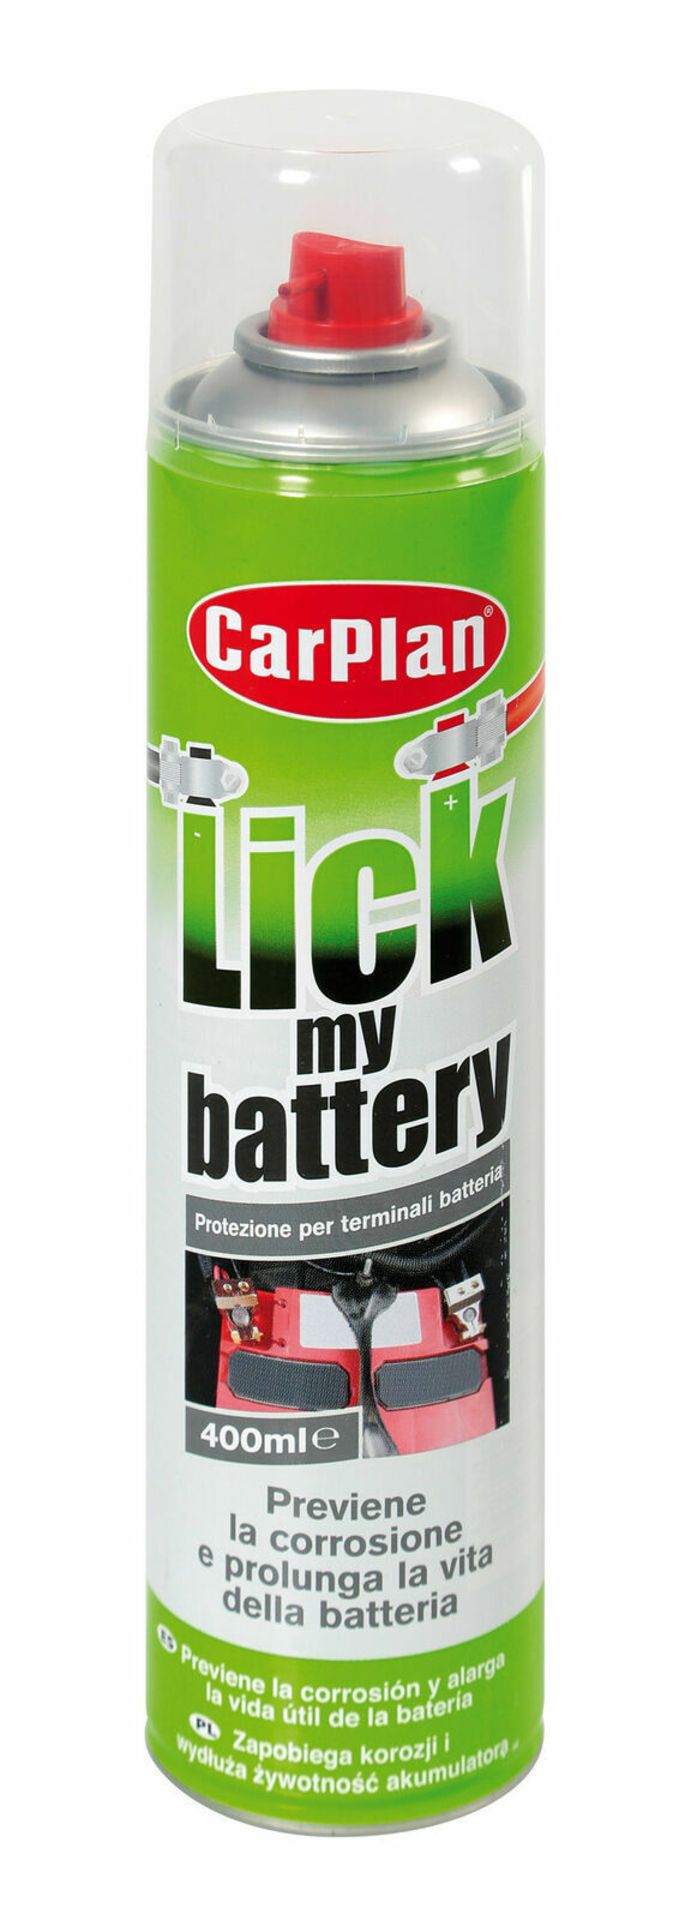 6 x CarPlan Lick My Battery 400ML - Amazon 12.97 ea